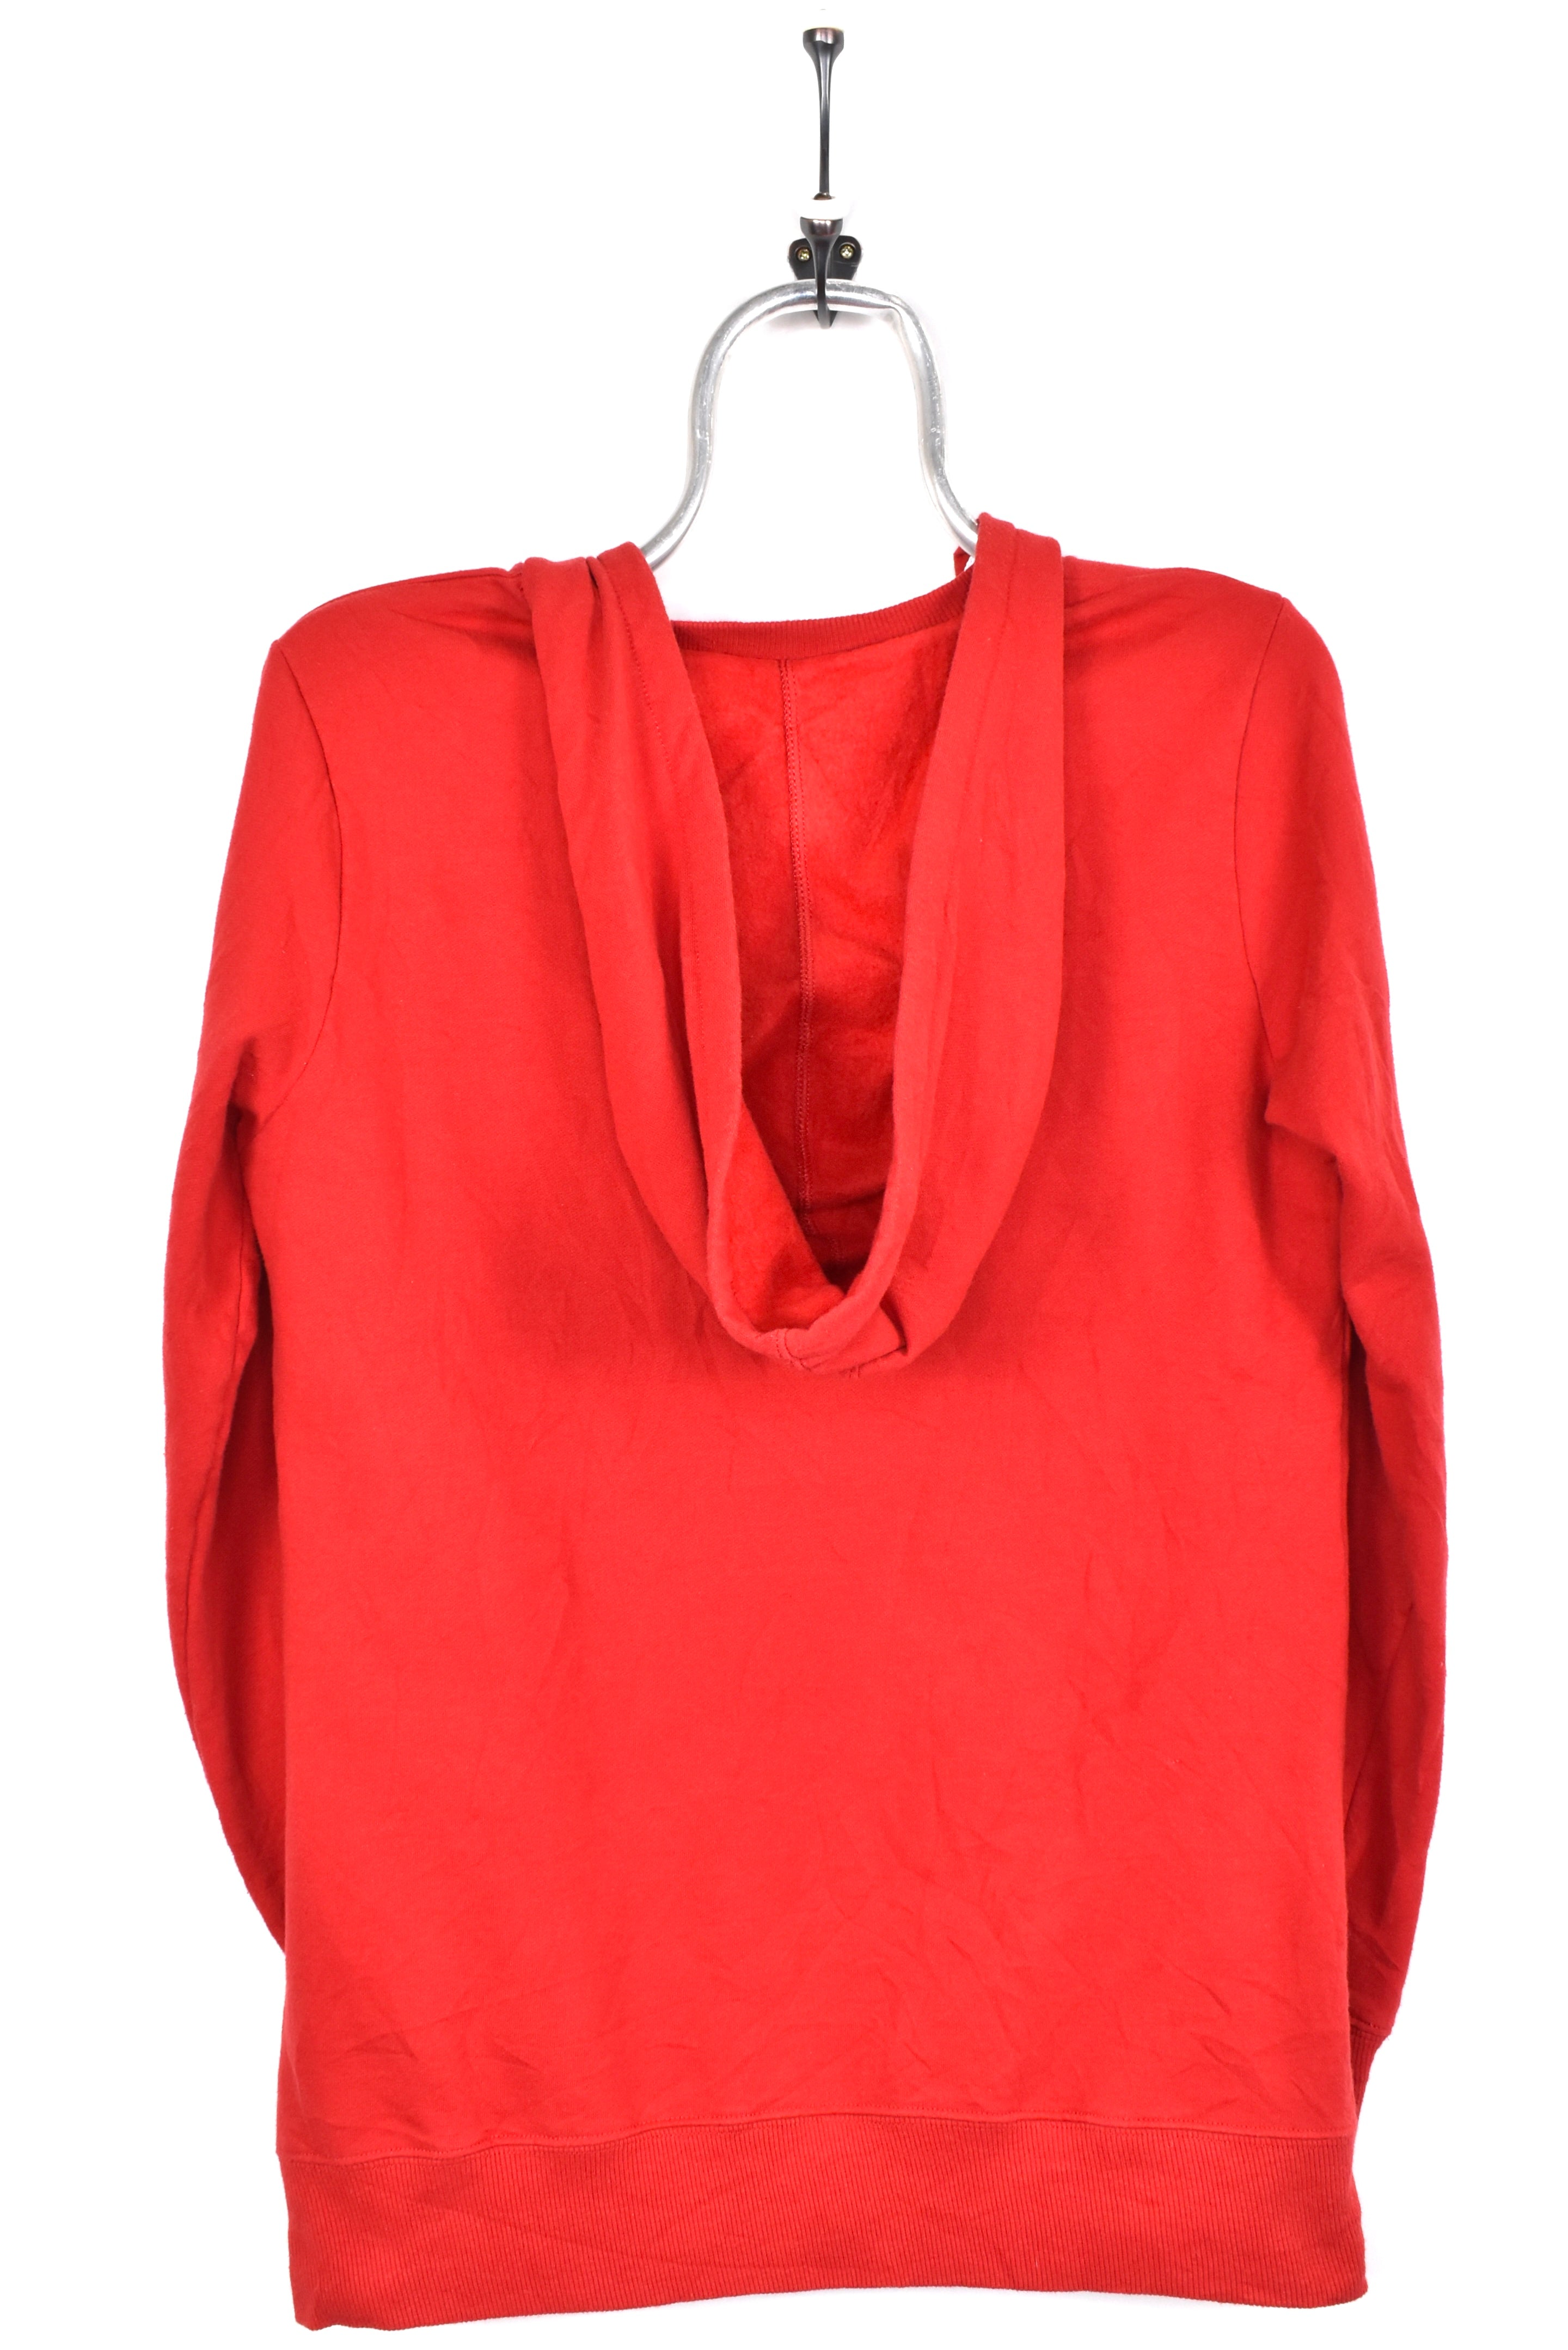 Women's modern University of Wisconsin hoodie, red graphic sweatshirt - AU M COLLEGE